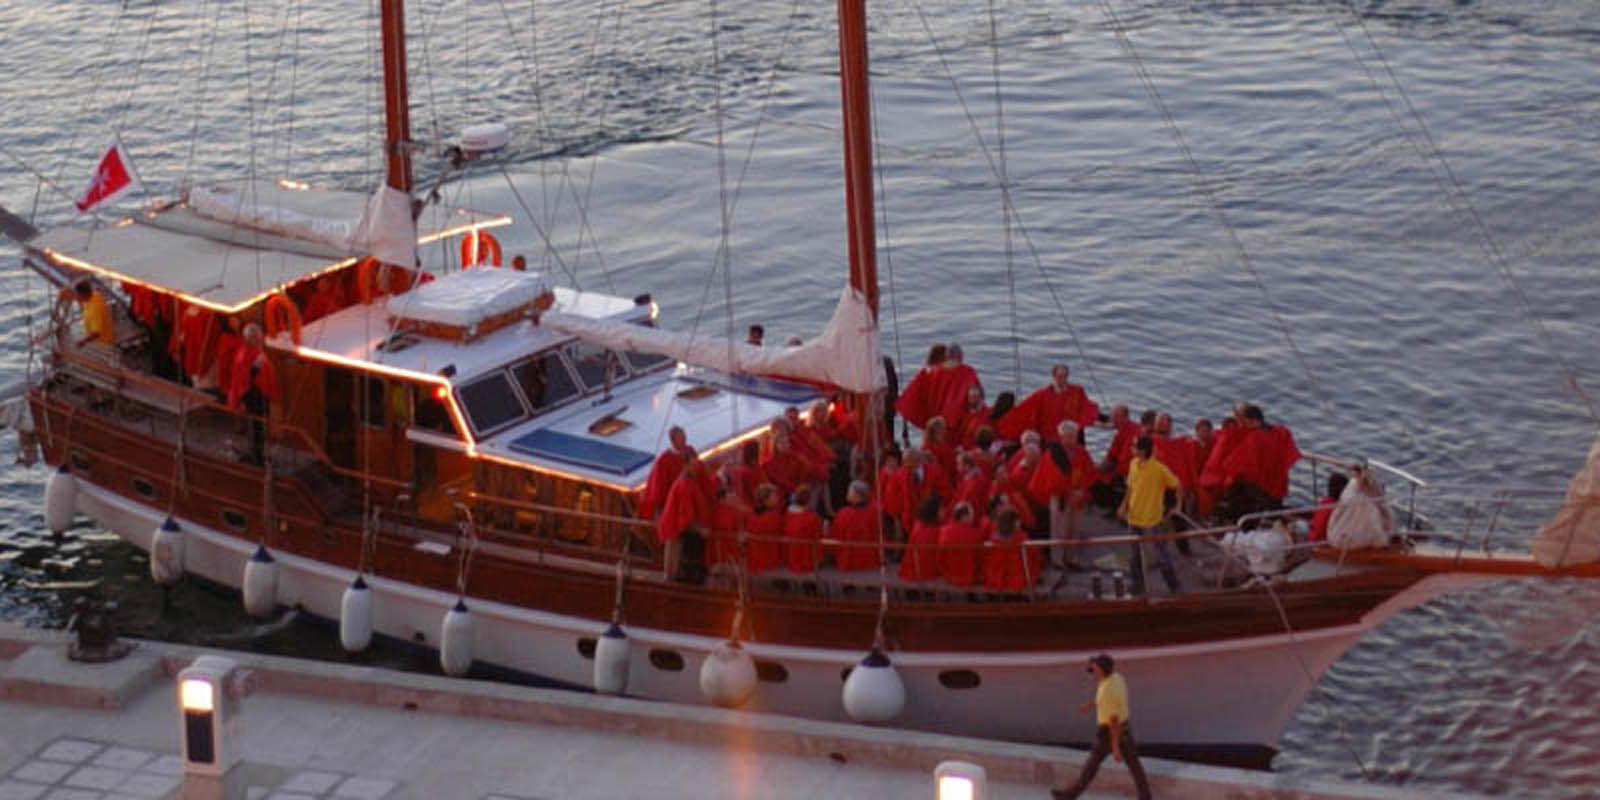 malta sea boat trip elegant group travel event